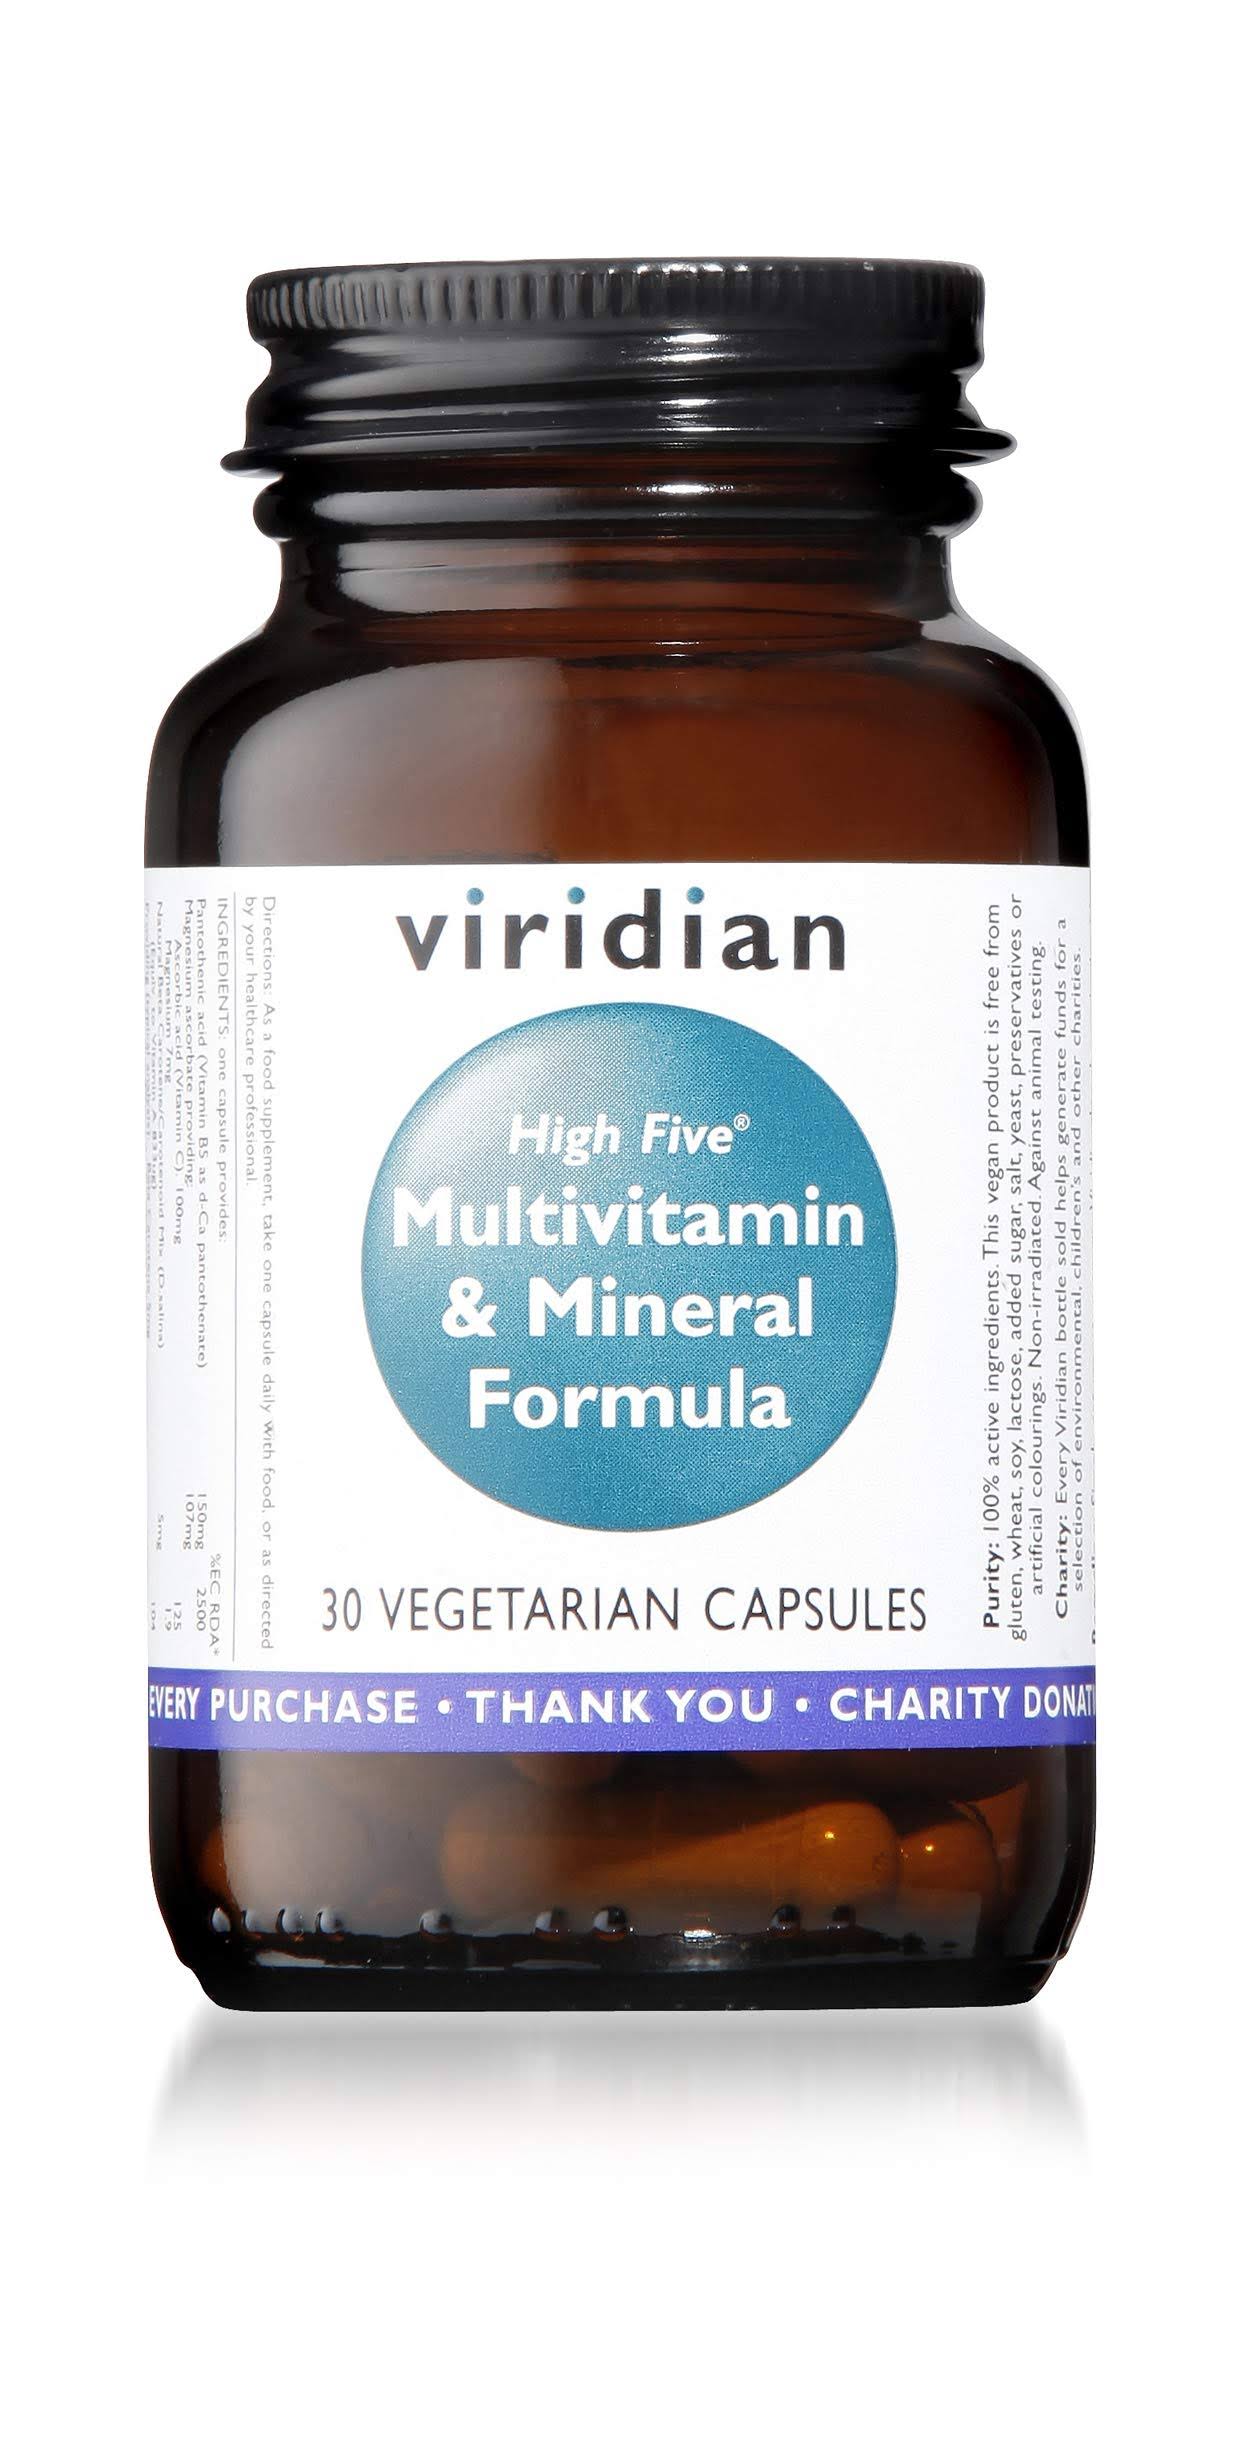 Viridian High Five Multivitamin & Mineral Formula - 30 capsules